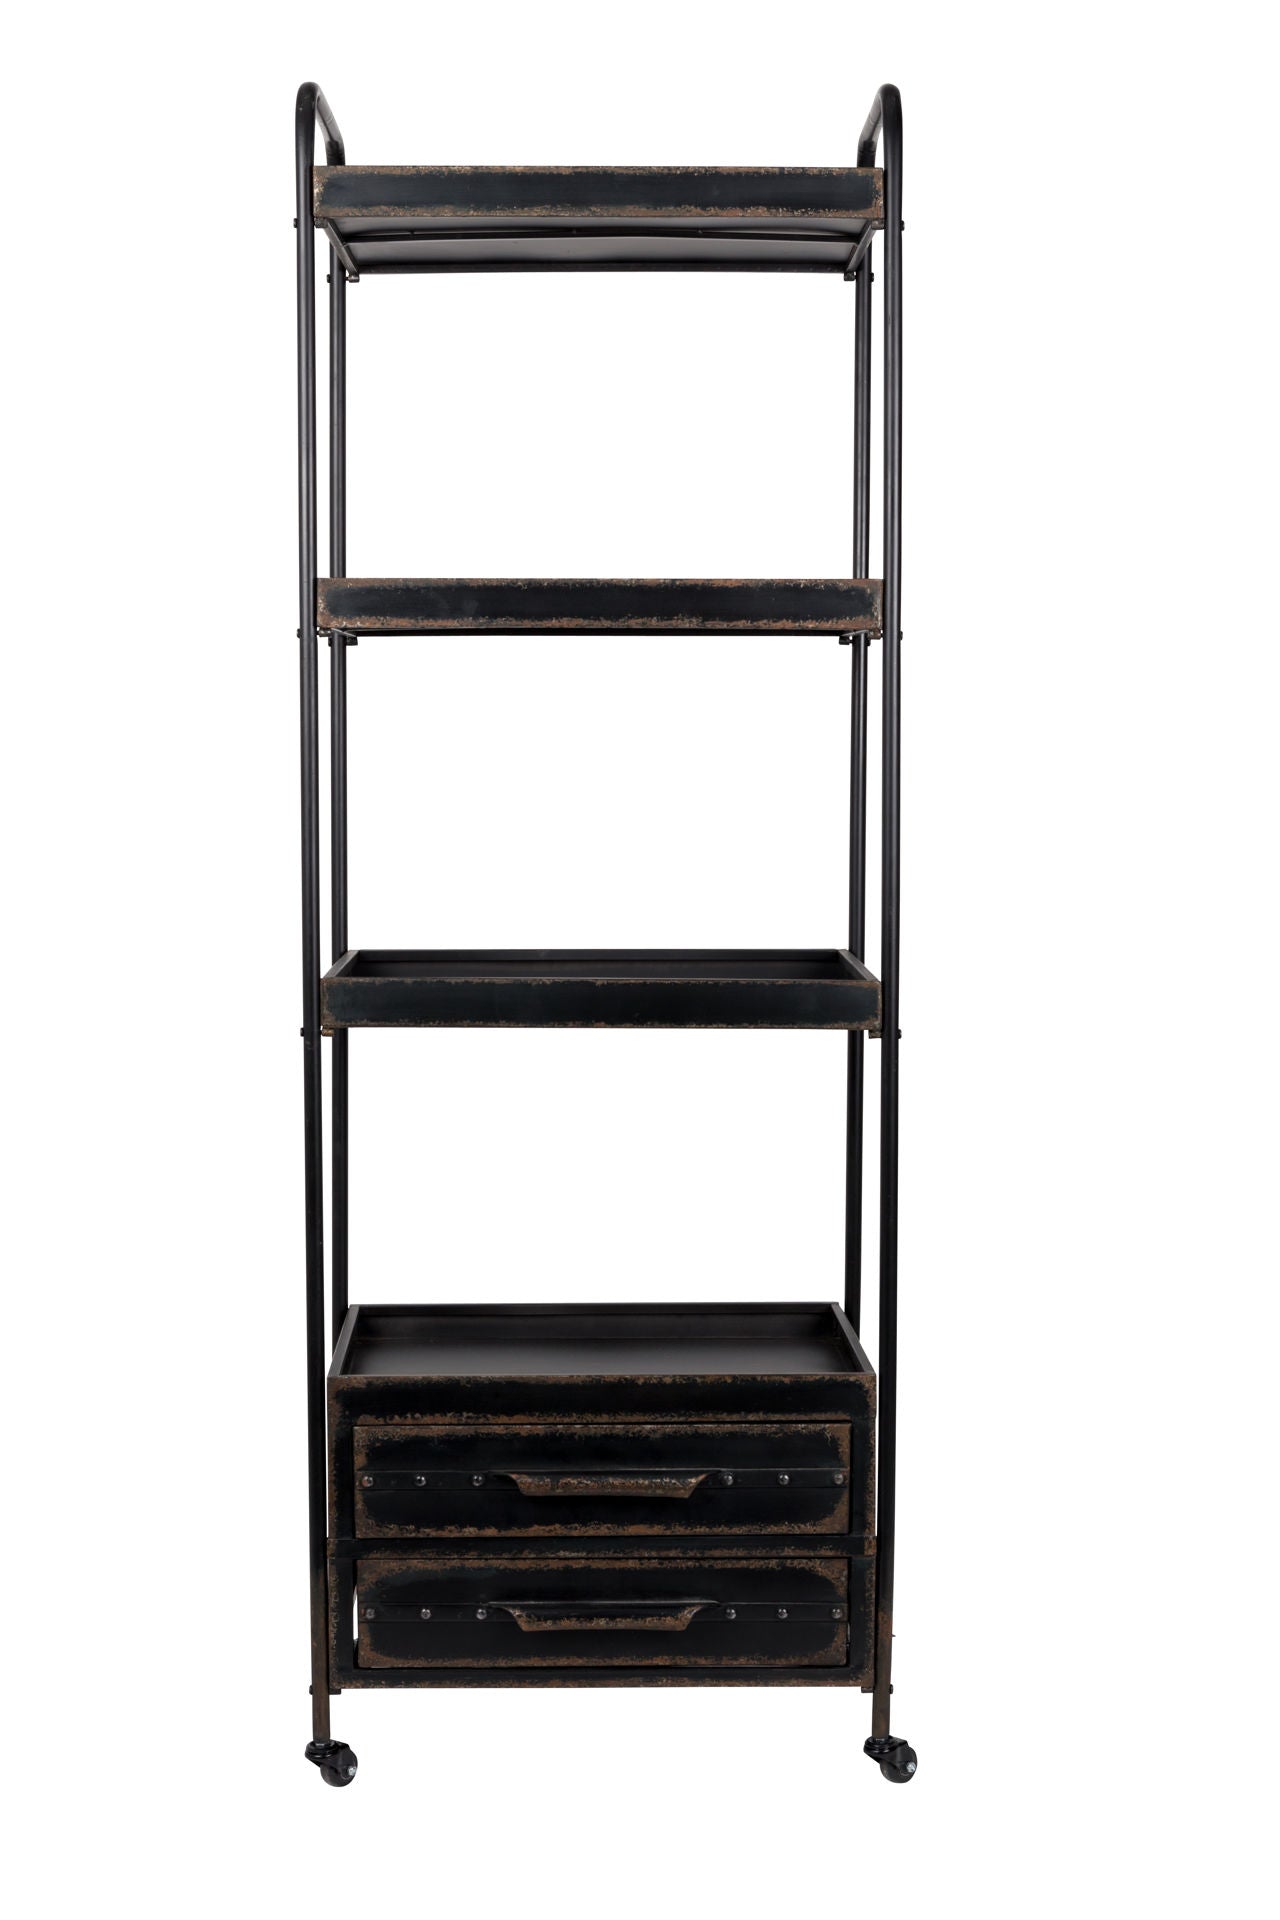 Nancy's Roma Plank - Industrieel - Zwart, Bruin - IJzer, Hout, Kunststof - 33 cm x 48,5 cm x 11 cm